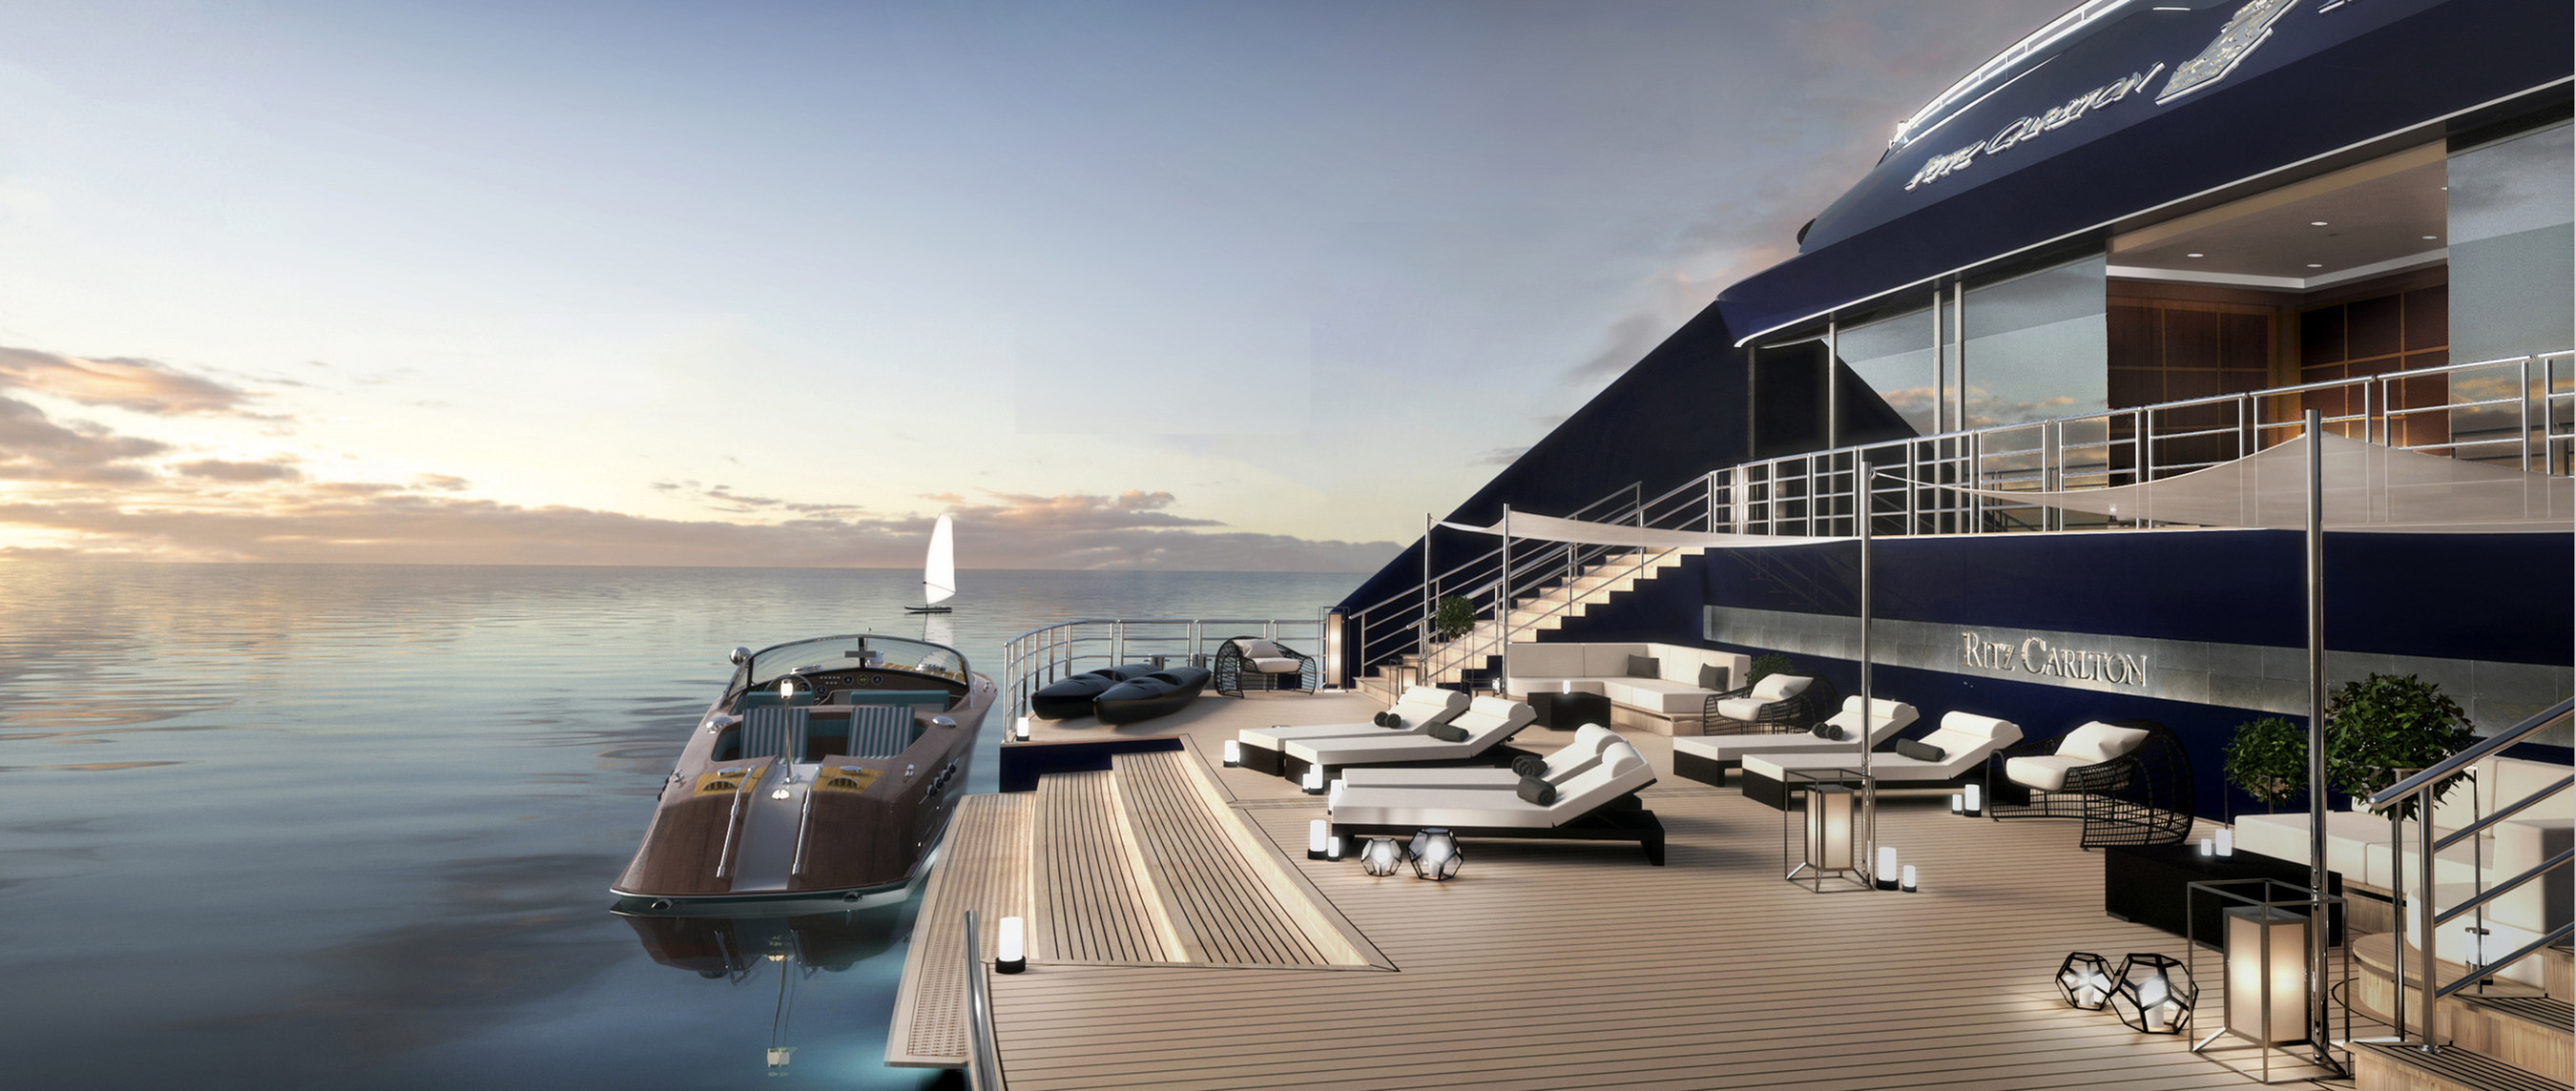 Ritz Carlton, yacht, cruises